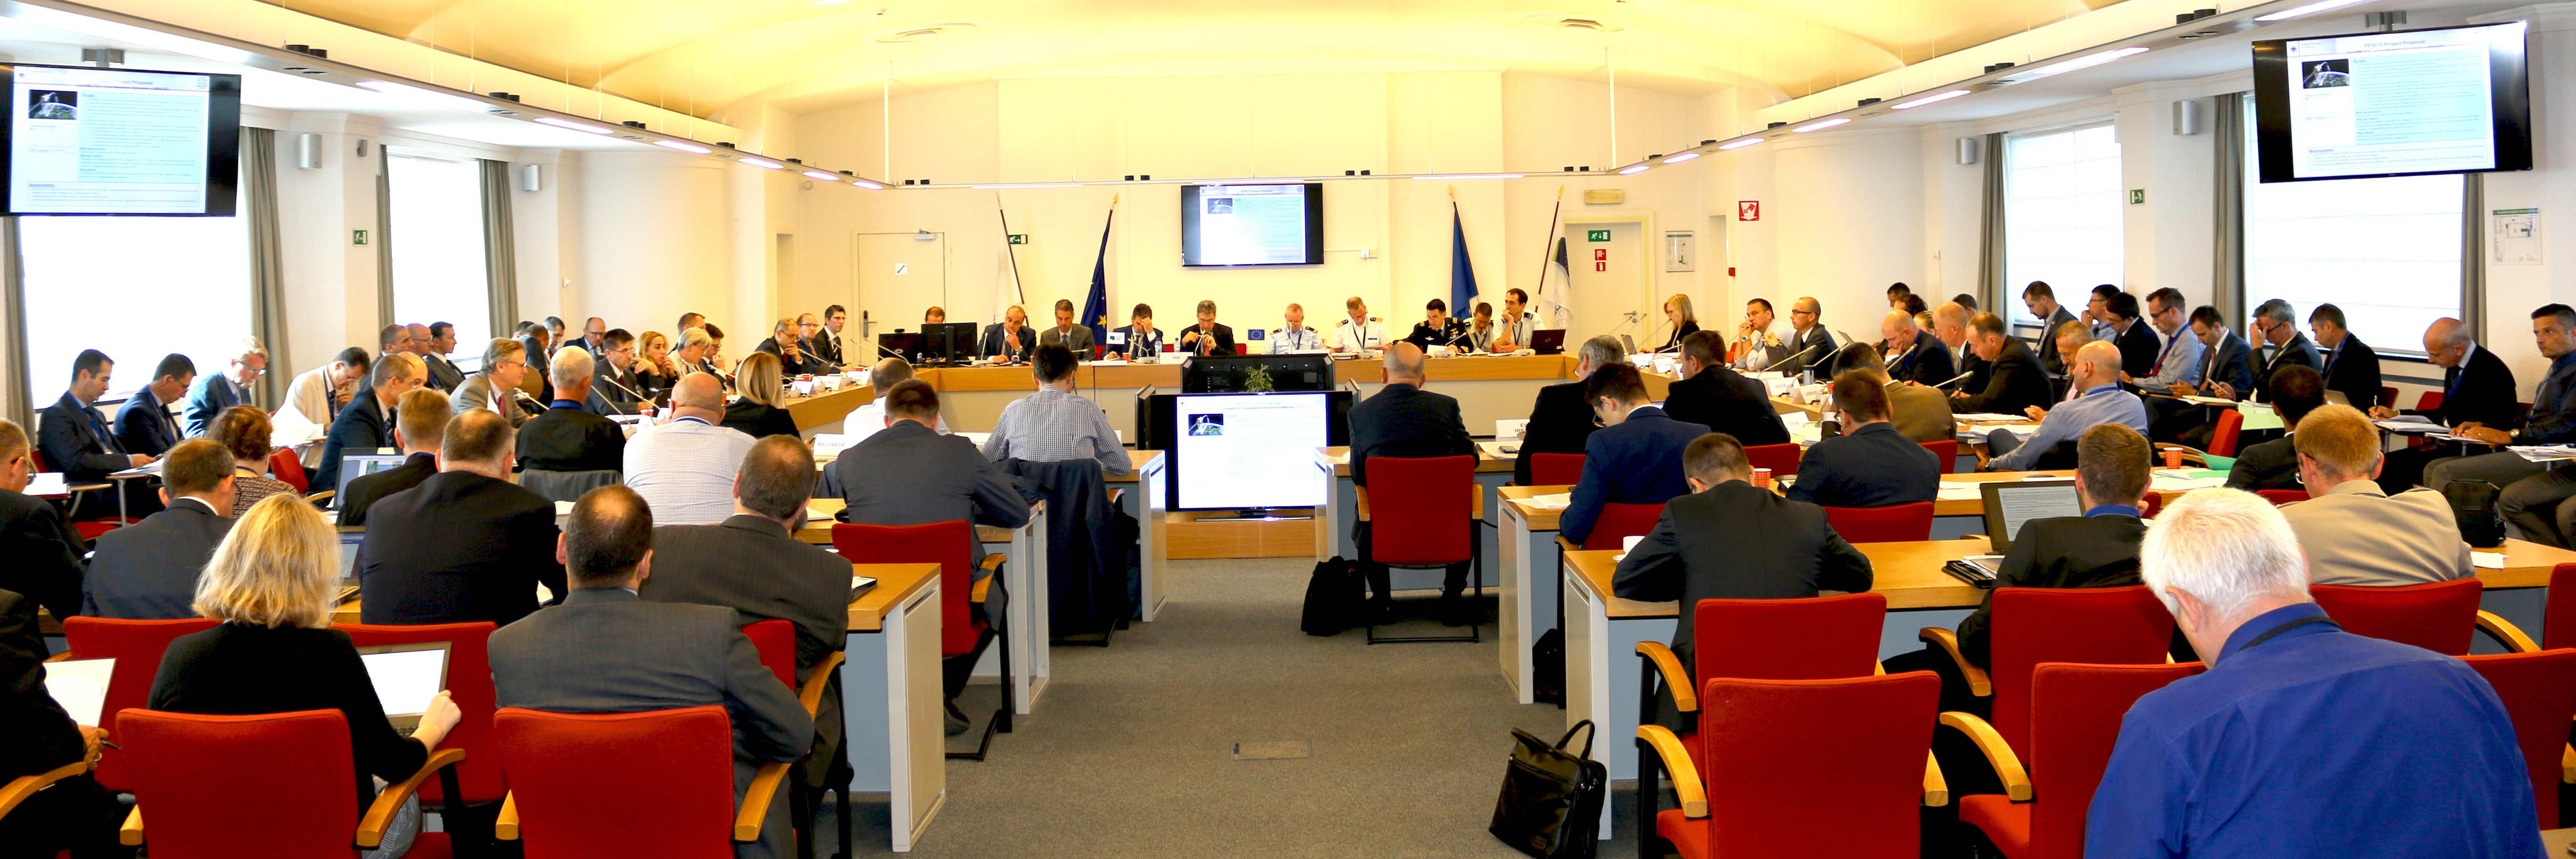 PESCO ‘clarification workshop’ held in EDA